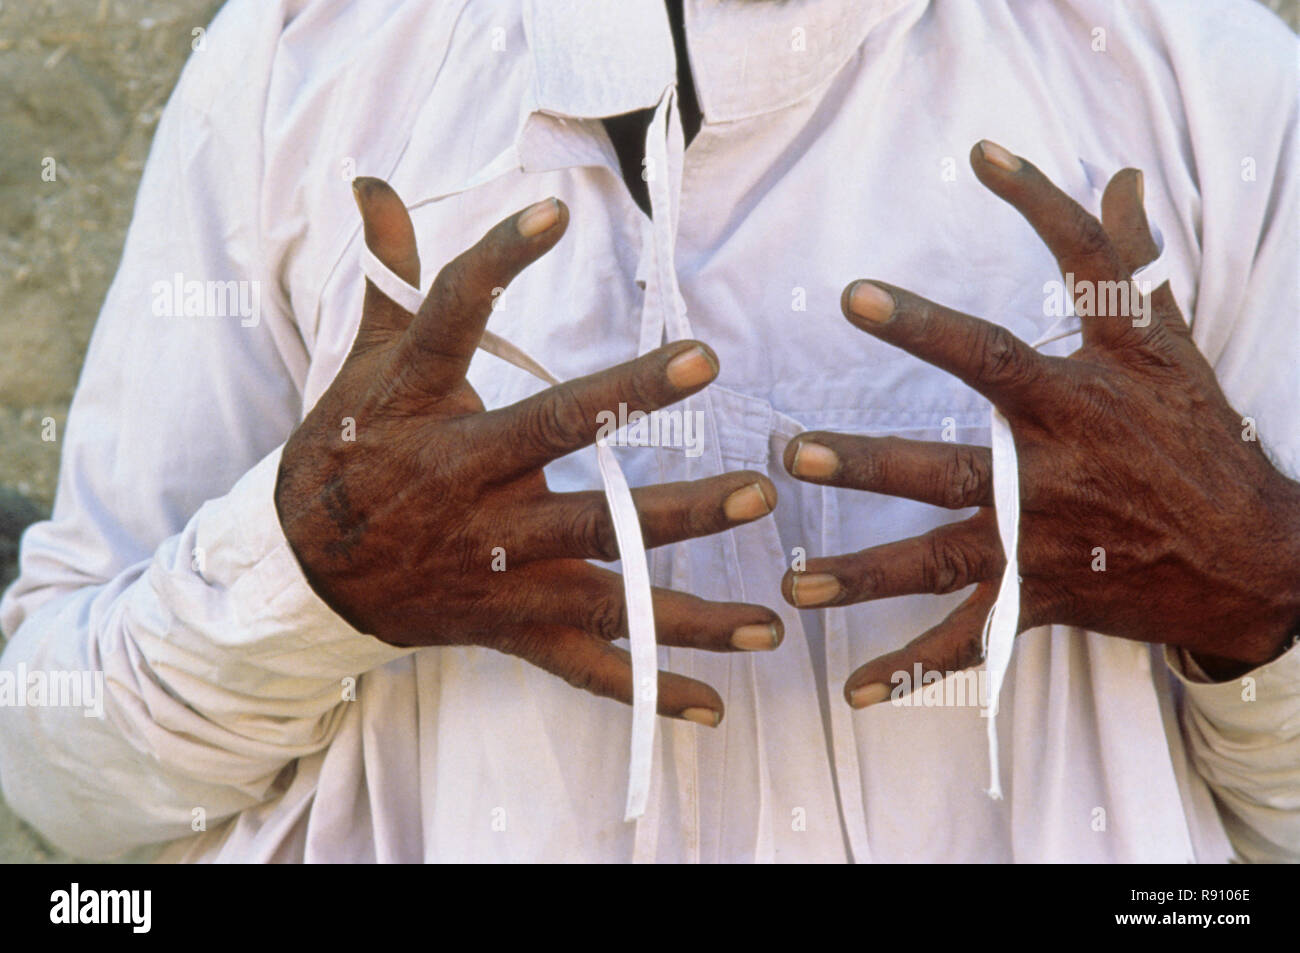 Seis dedos, foto de familia característica, india Foto de stock